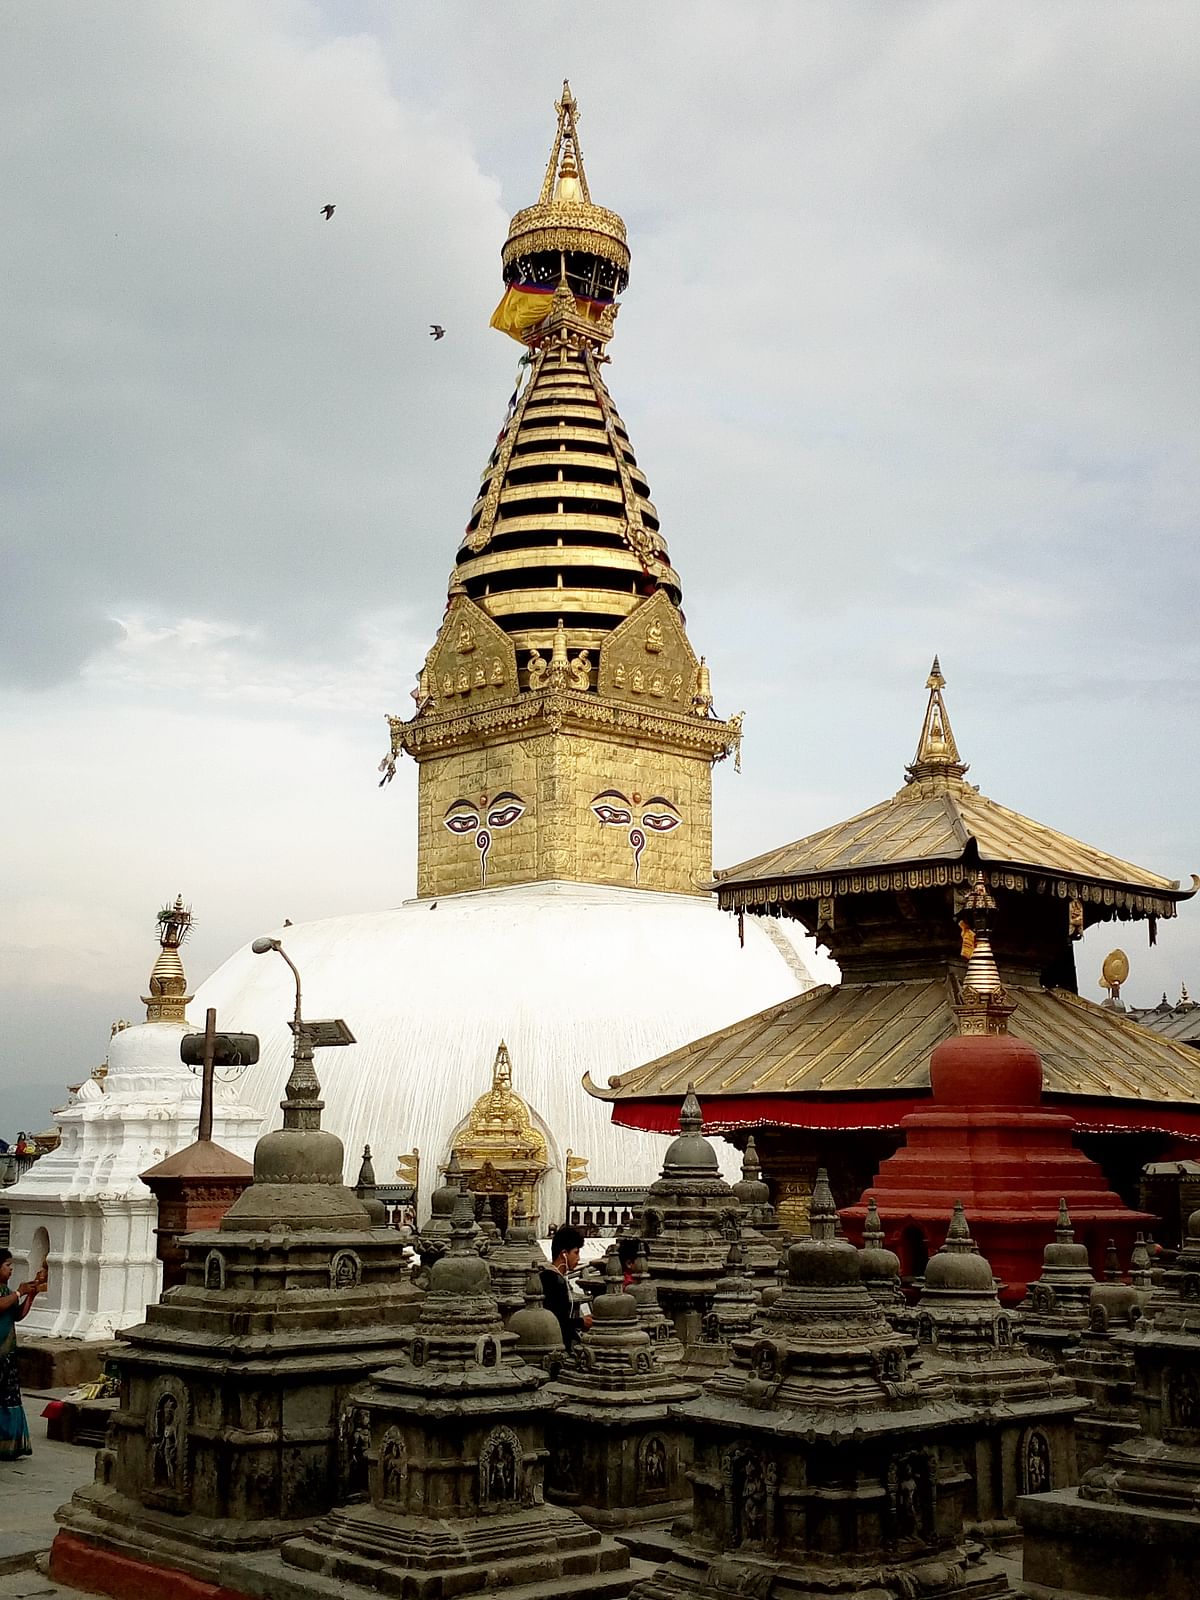 Indians rarely visit Nepal, even if flights to Kathmandu are cheaper than those to Goa, writes Prerna Mukharya.